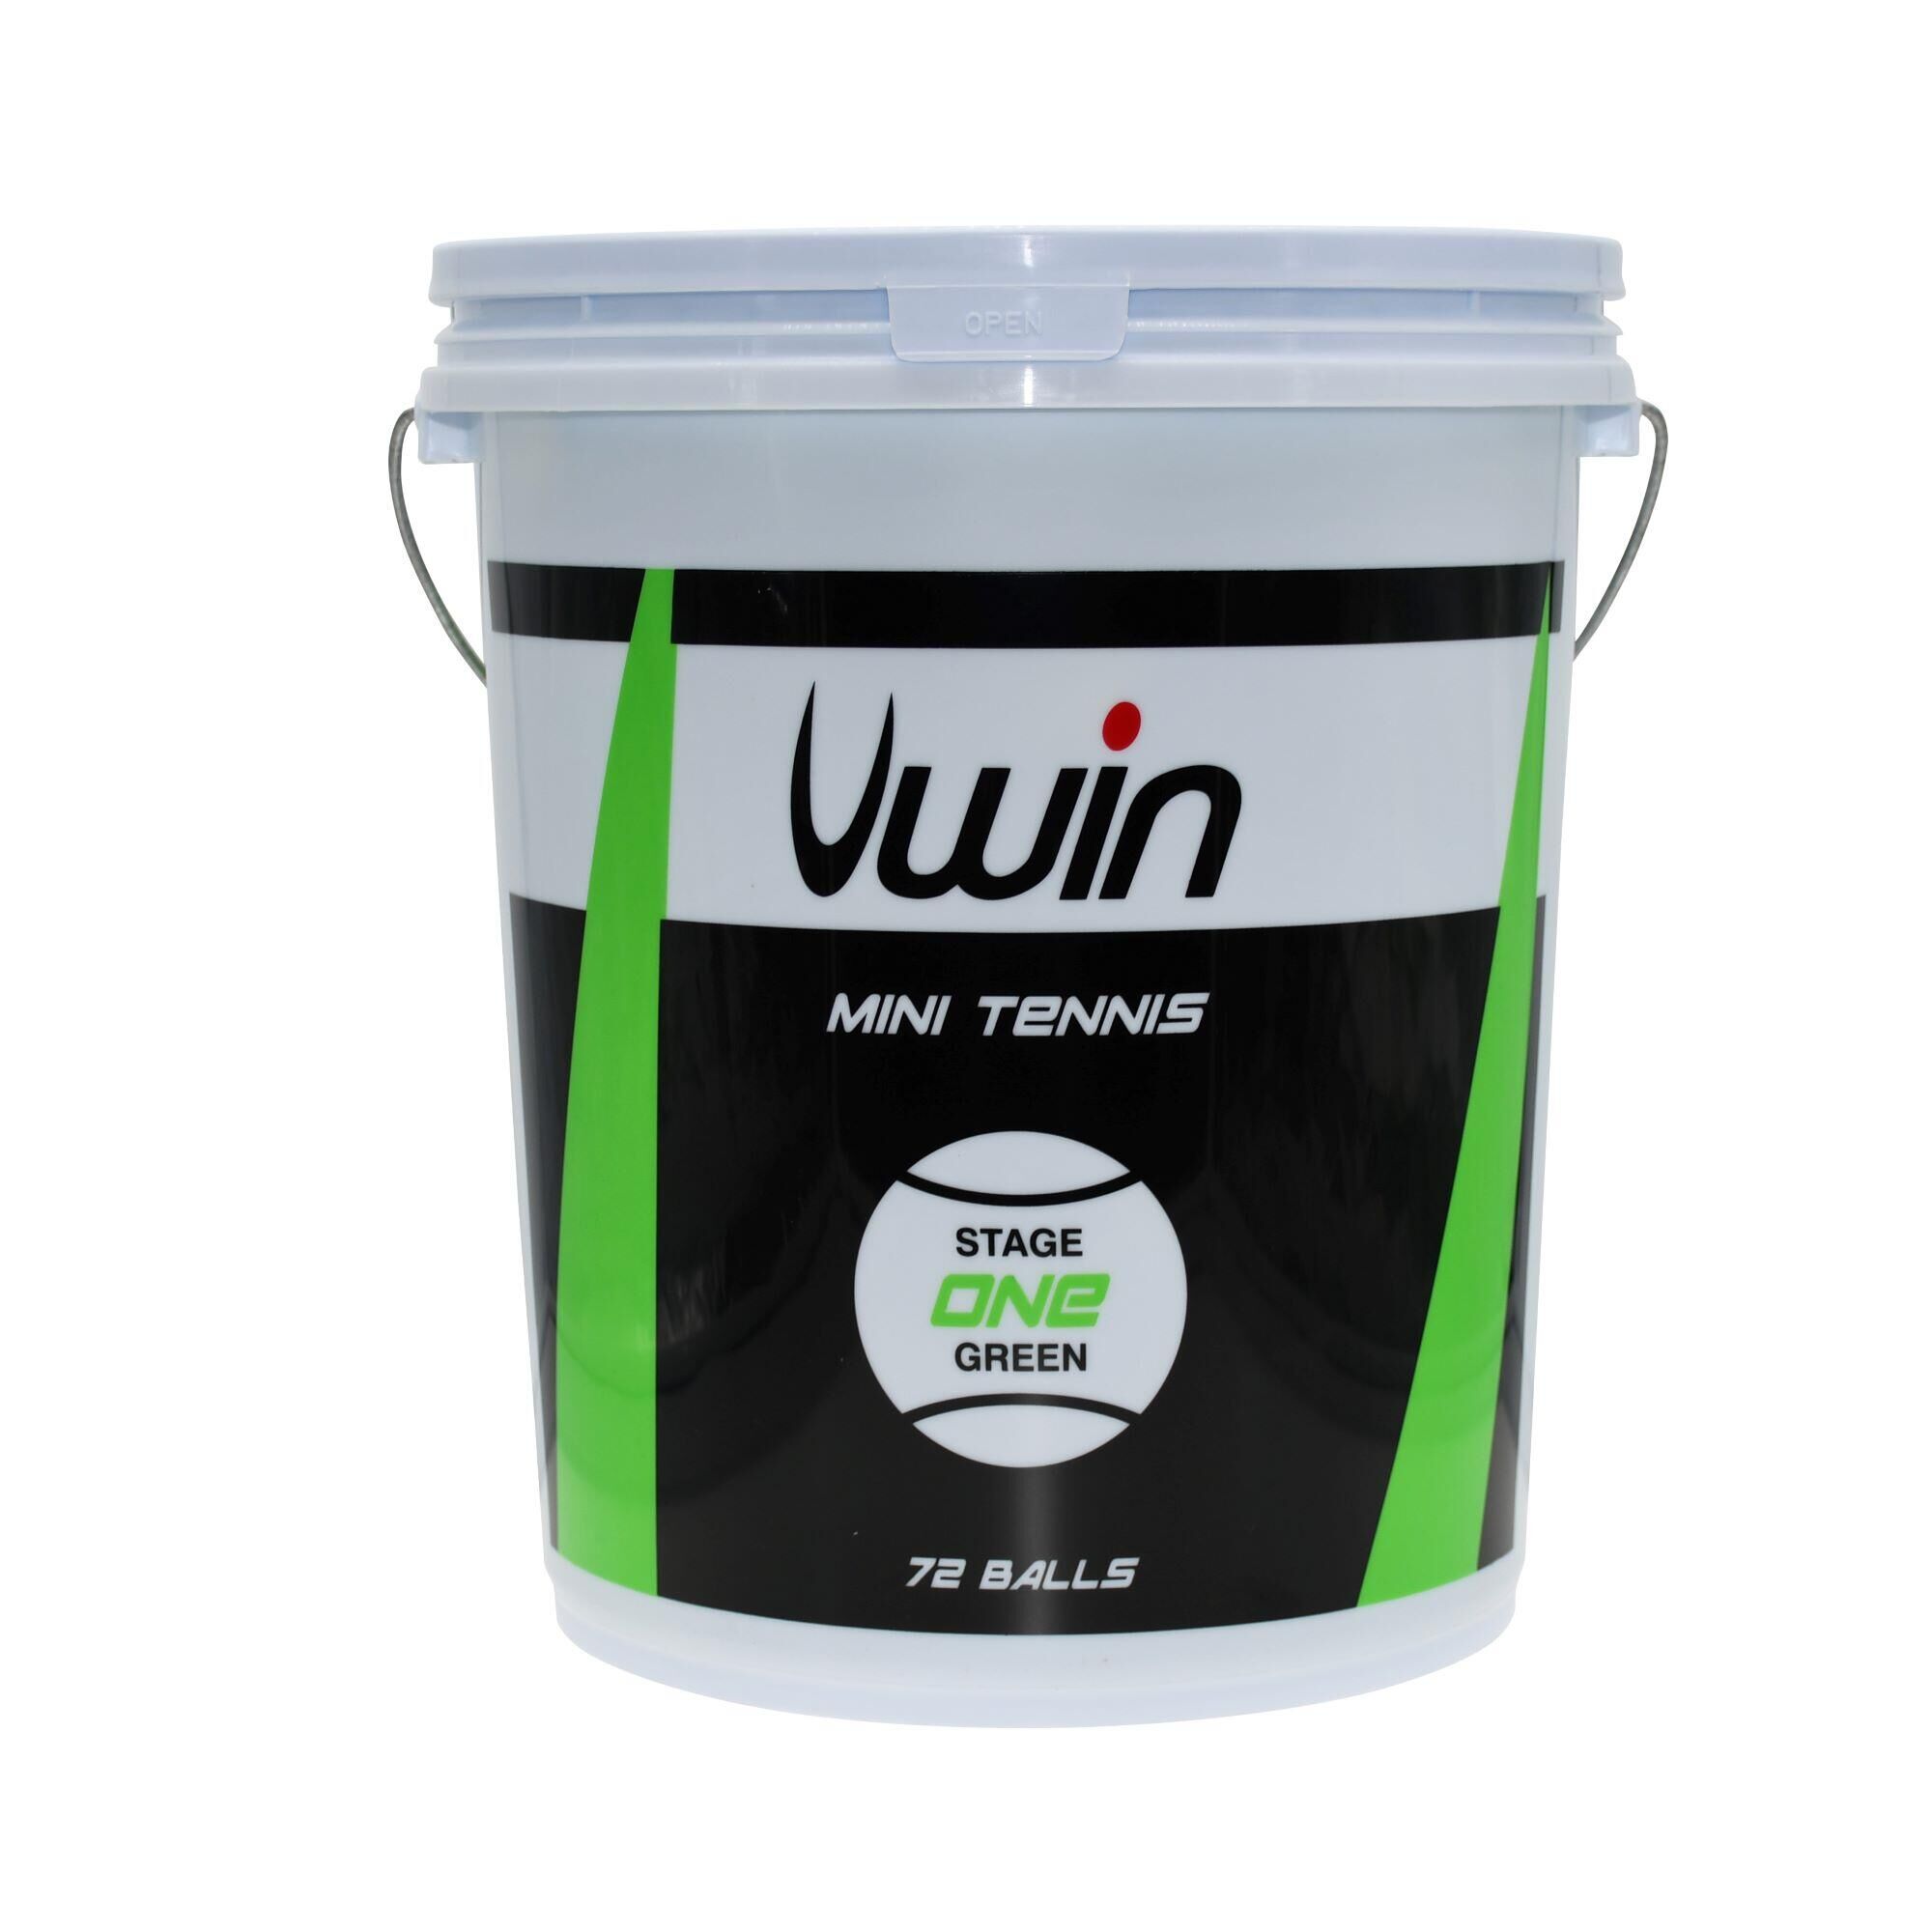 UWIN Uwin Stage 1 Green Tennis Balls - Bucket of 72 balls